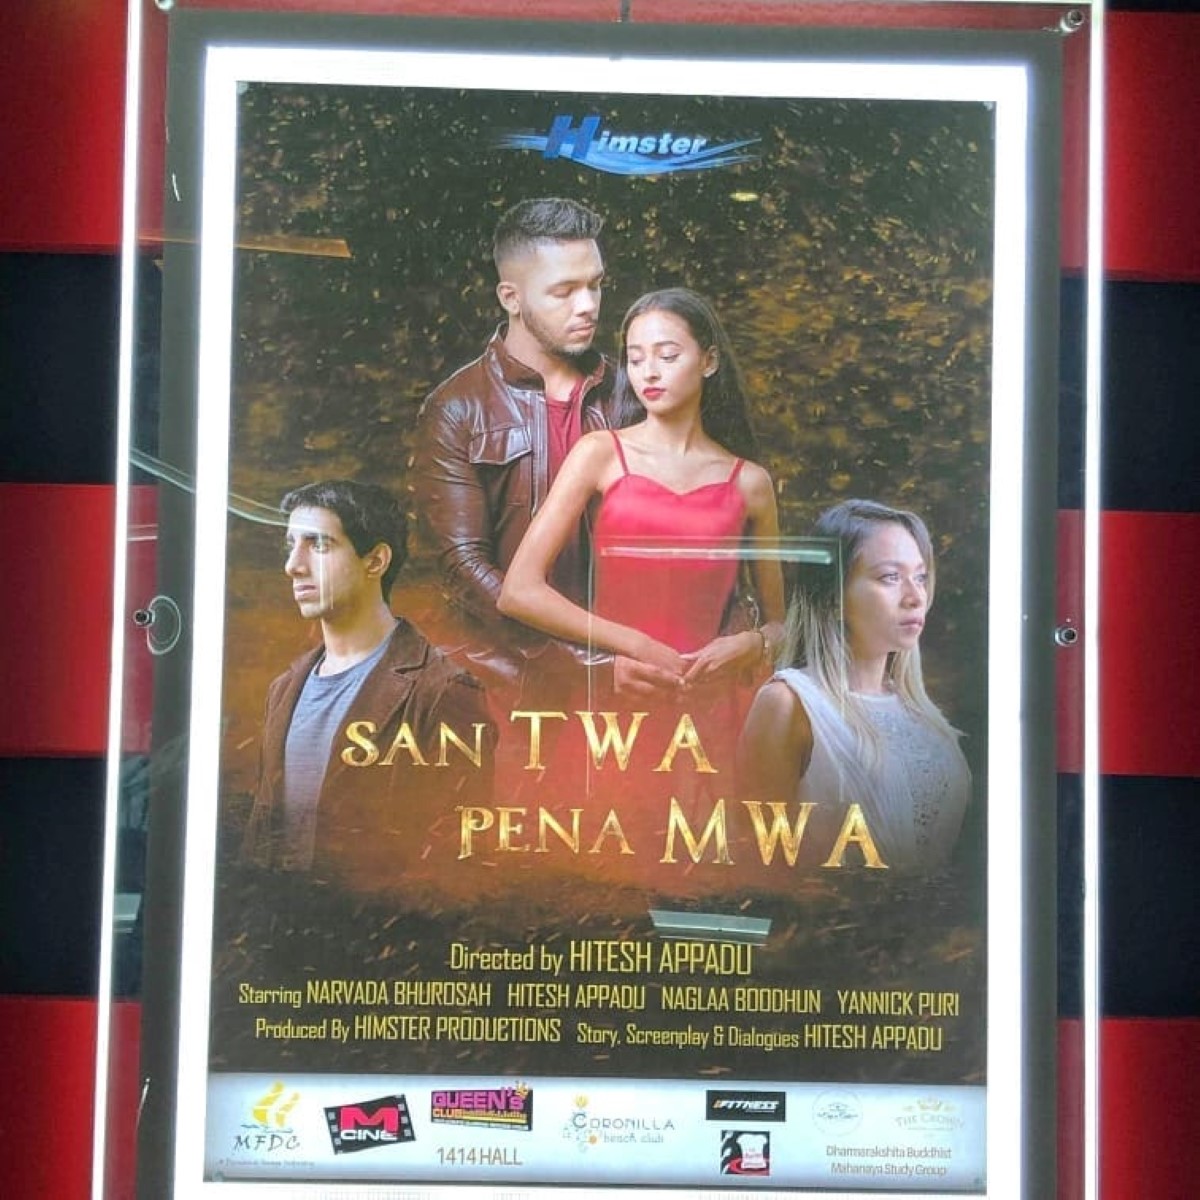 [Trailer] Le film "San Twa Pena Mwa" bientôt au cinéma